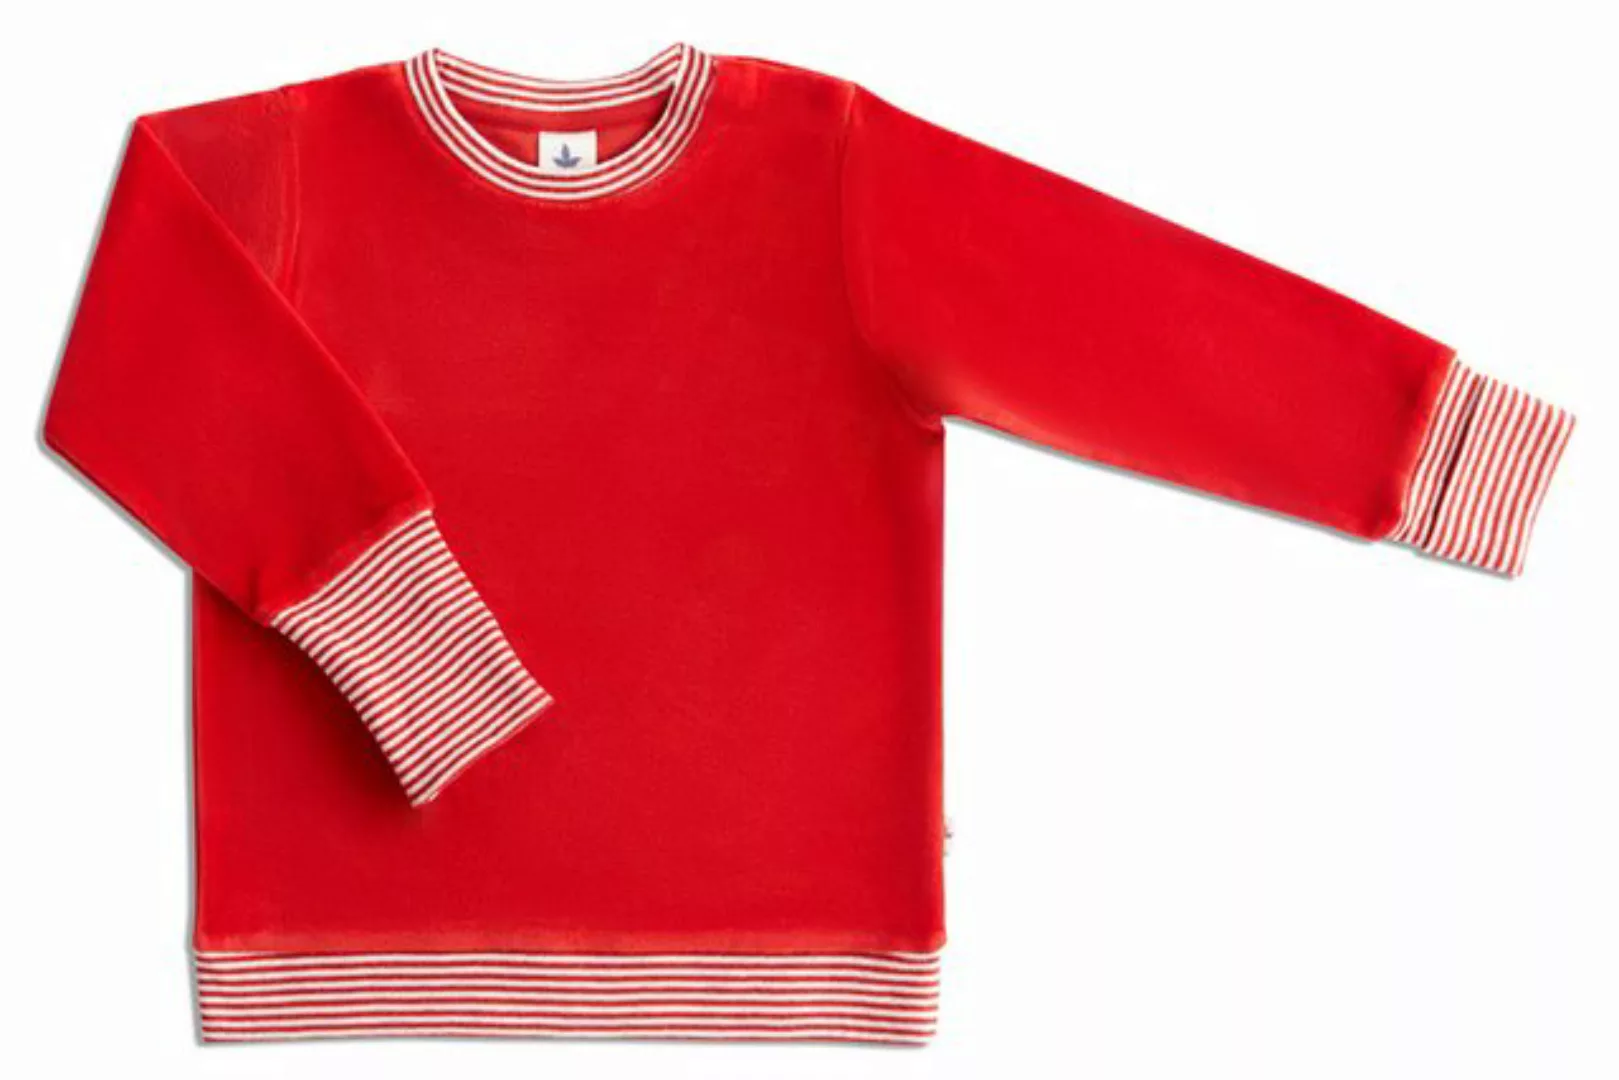 Leela COTTON Sweatshirt Nickysweatshirt günstig online kaufen